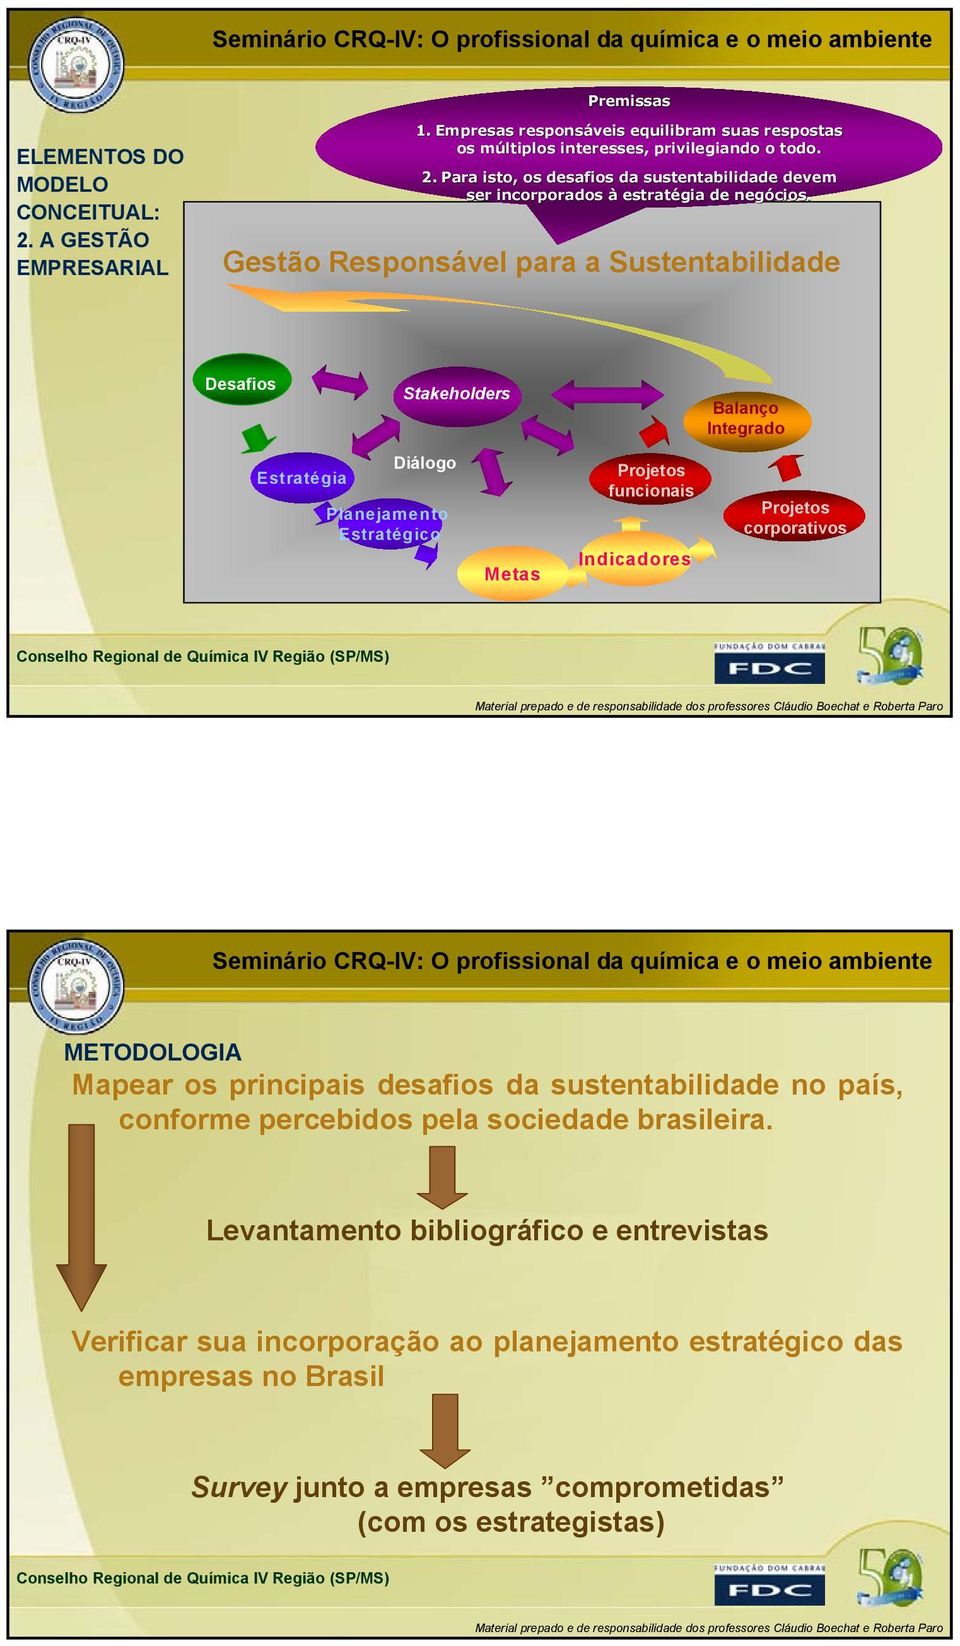 METODOLOGIA Mapear os principais desafios da sustentabilidade no país, conforme percebidos pela sociedade brasileira.